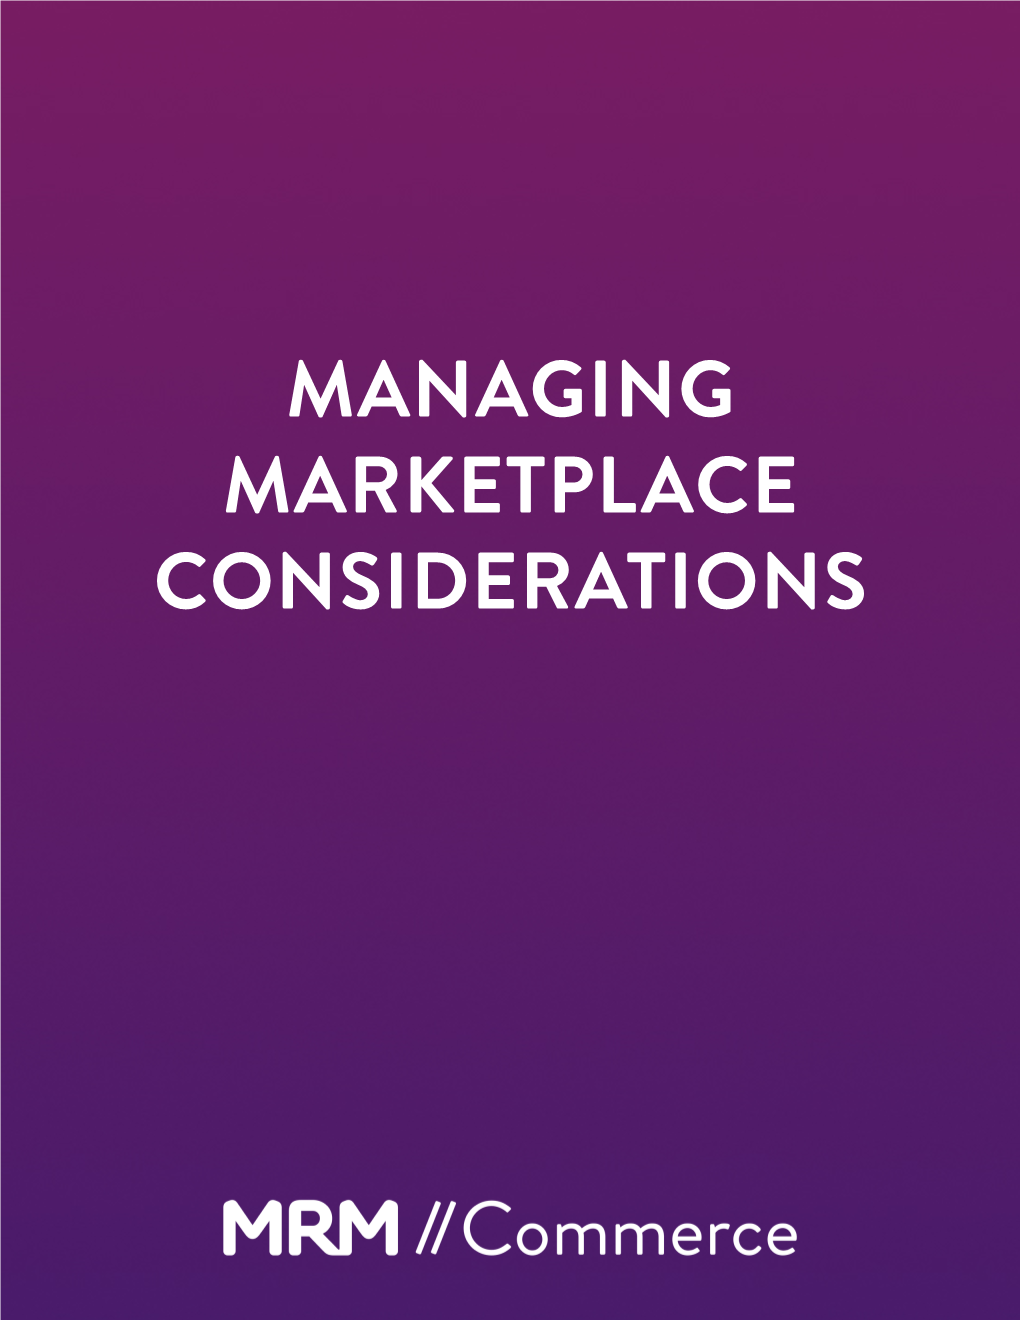 Managing Marketplace Considerations